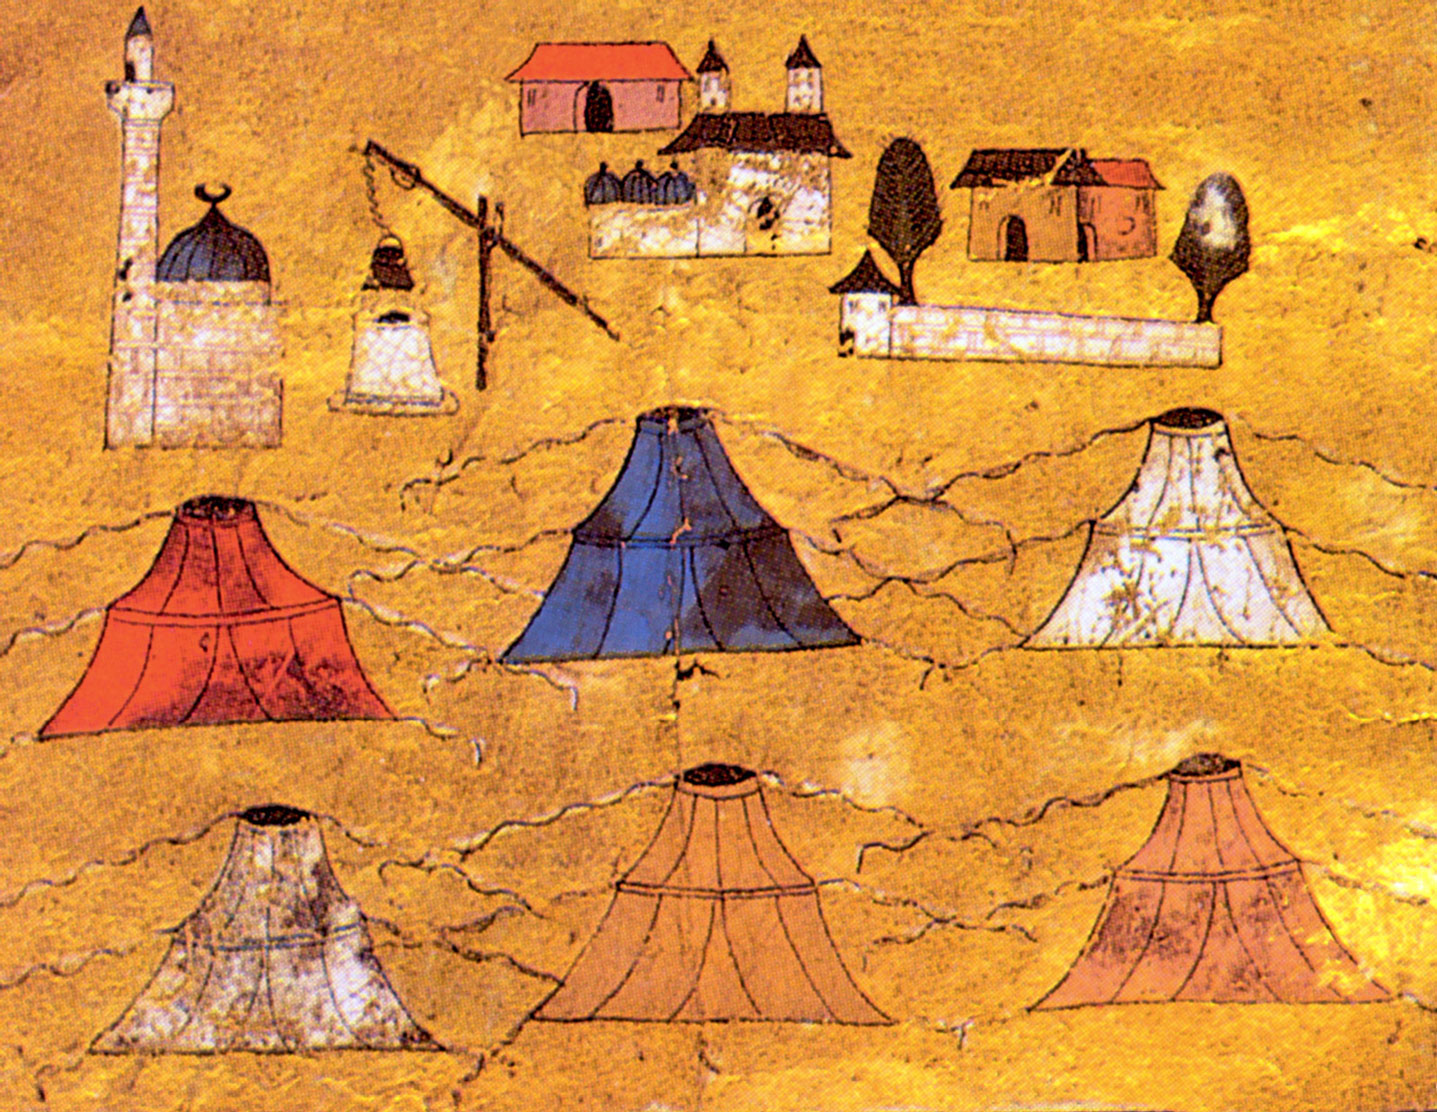 Ottoman military tents. Illustration from Tarih-i Feth-i Siklos ve Estergon ve
Ustunibelgirad, mid-sixteenth century (detail).